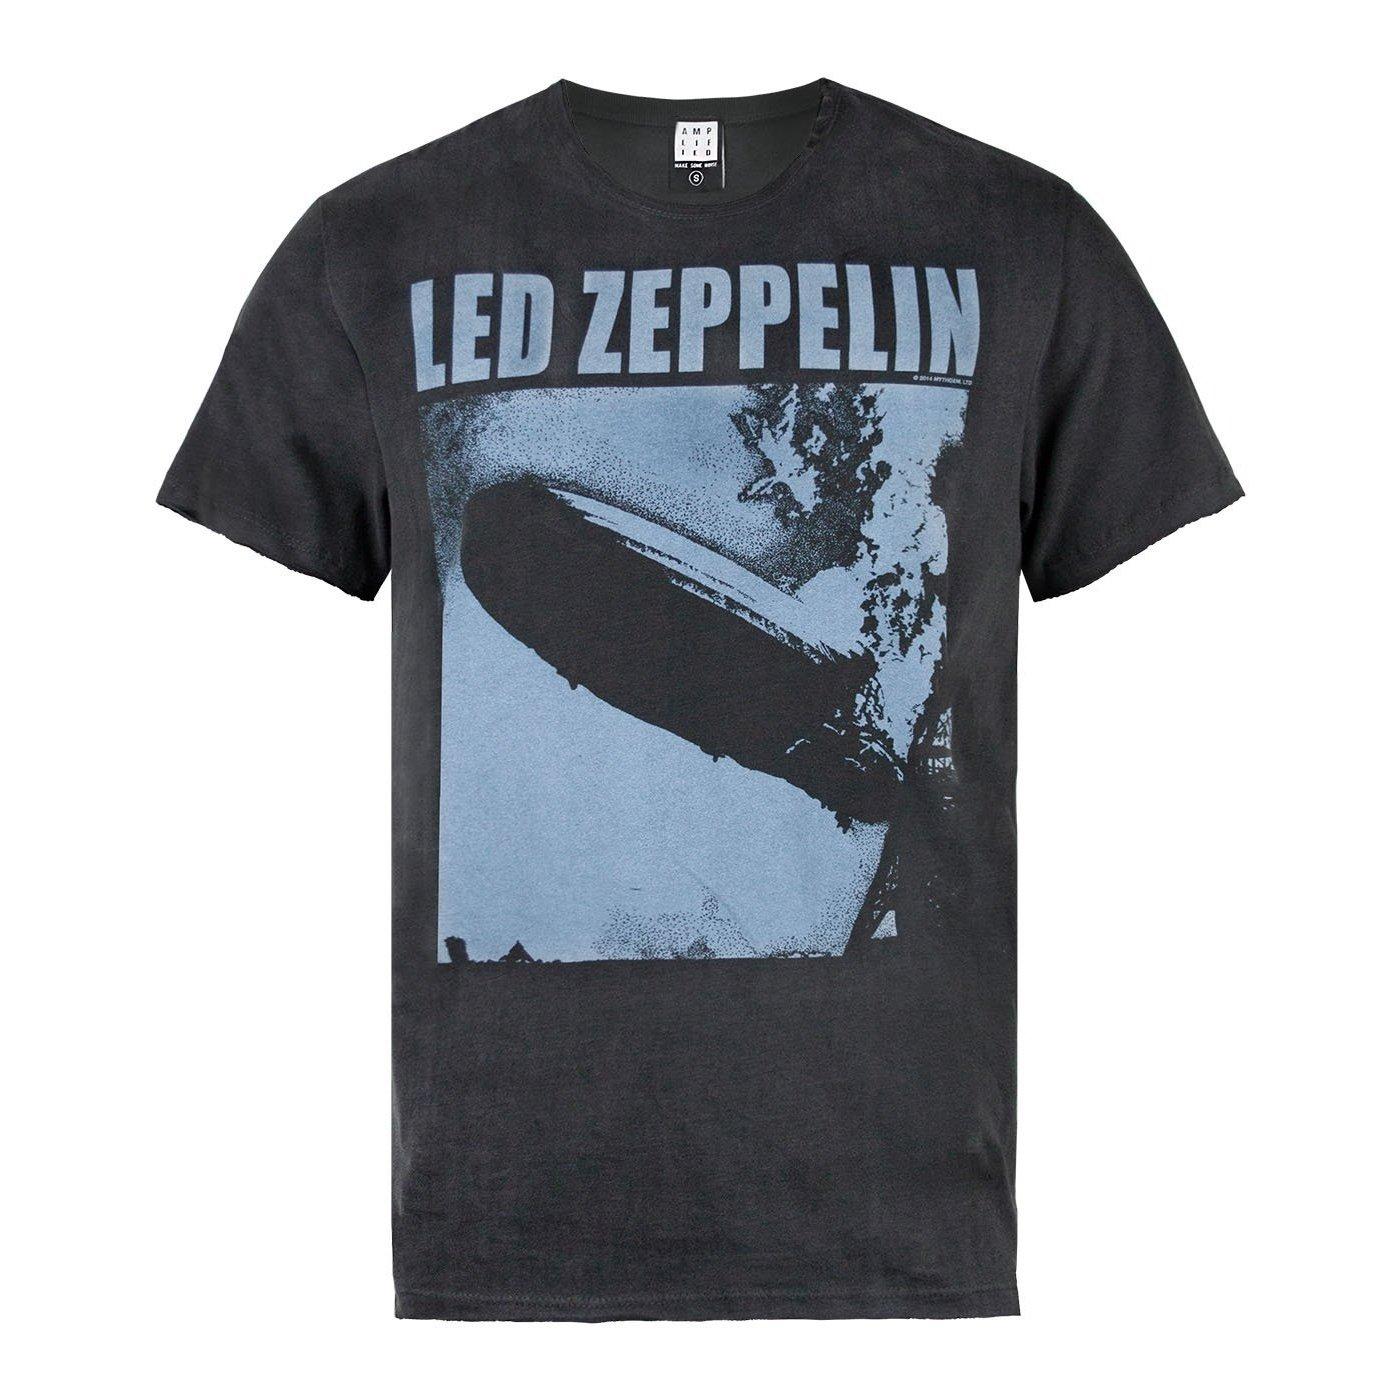 Led Zeppelin Tour 77 Tshirt Herren Charcoal Black M von Amplified